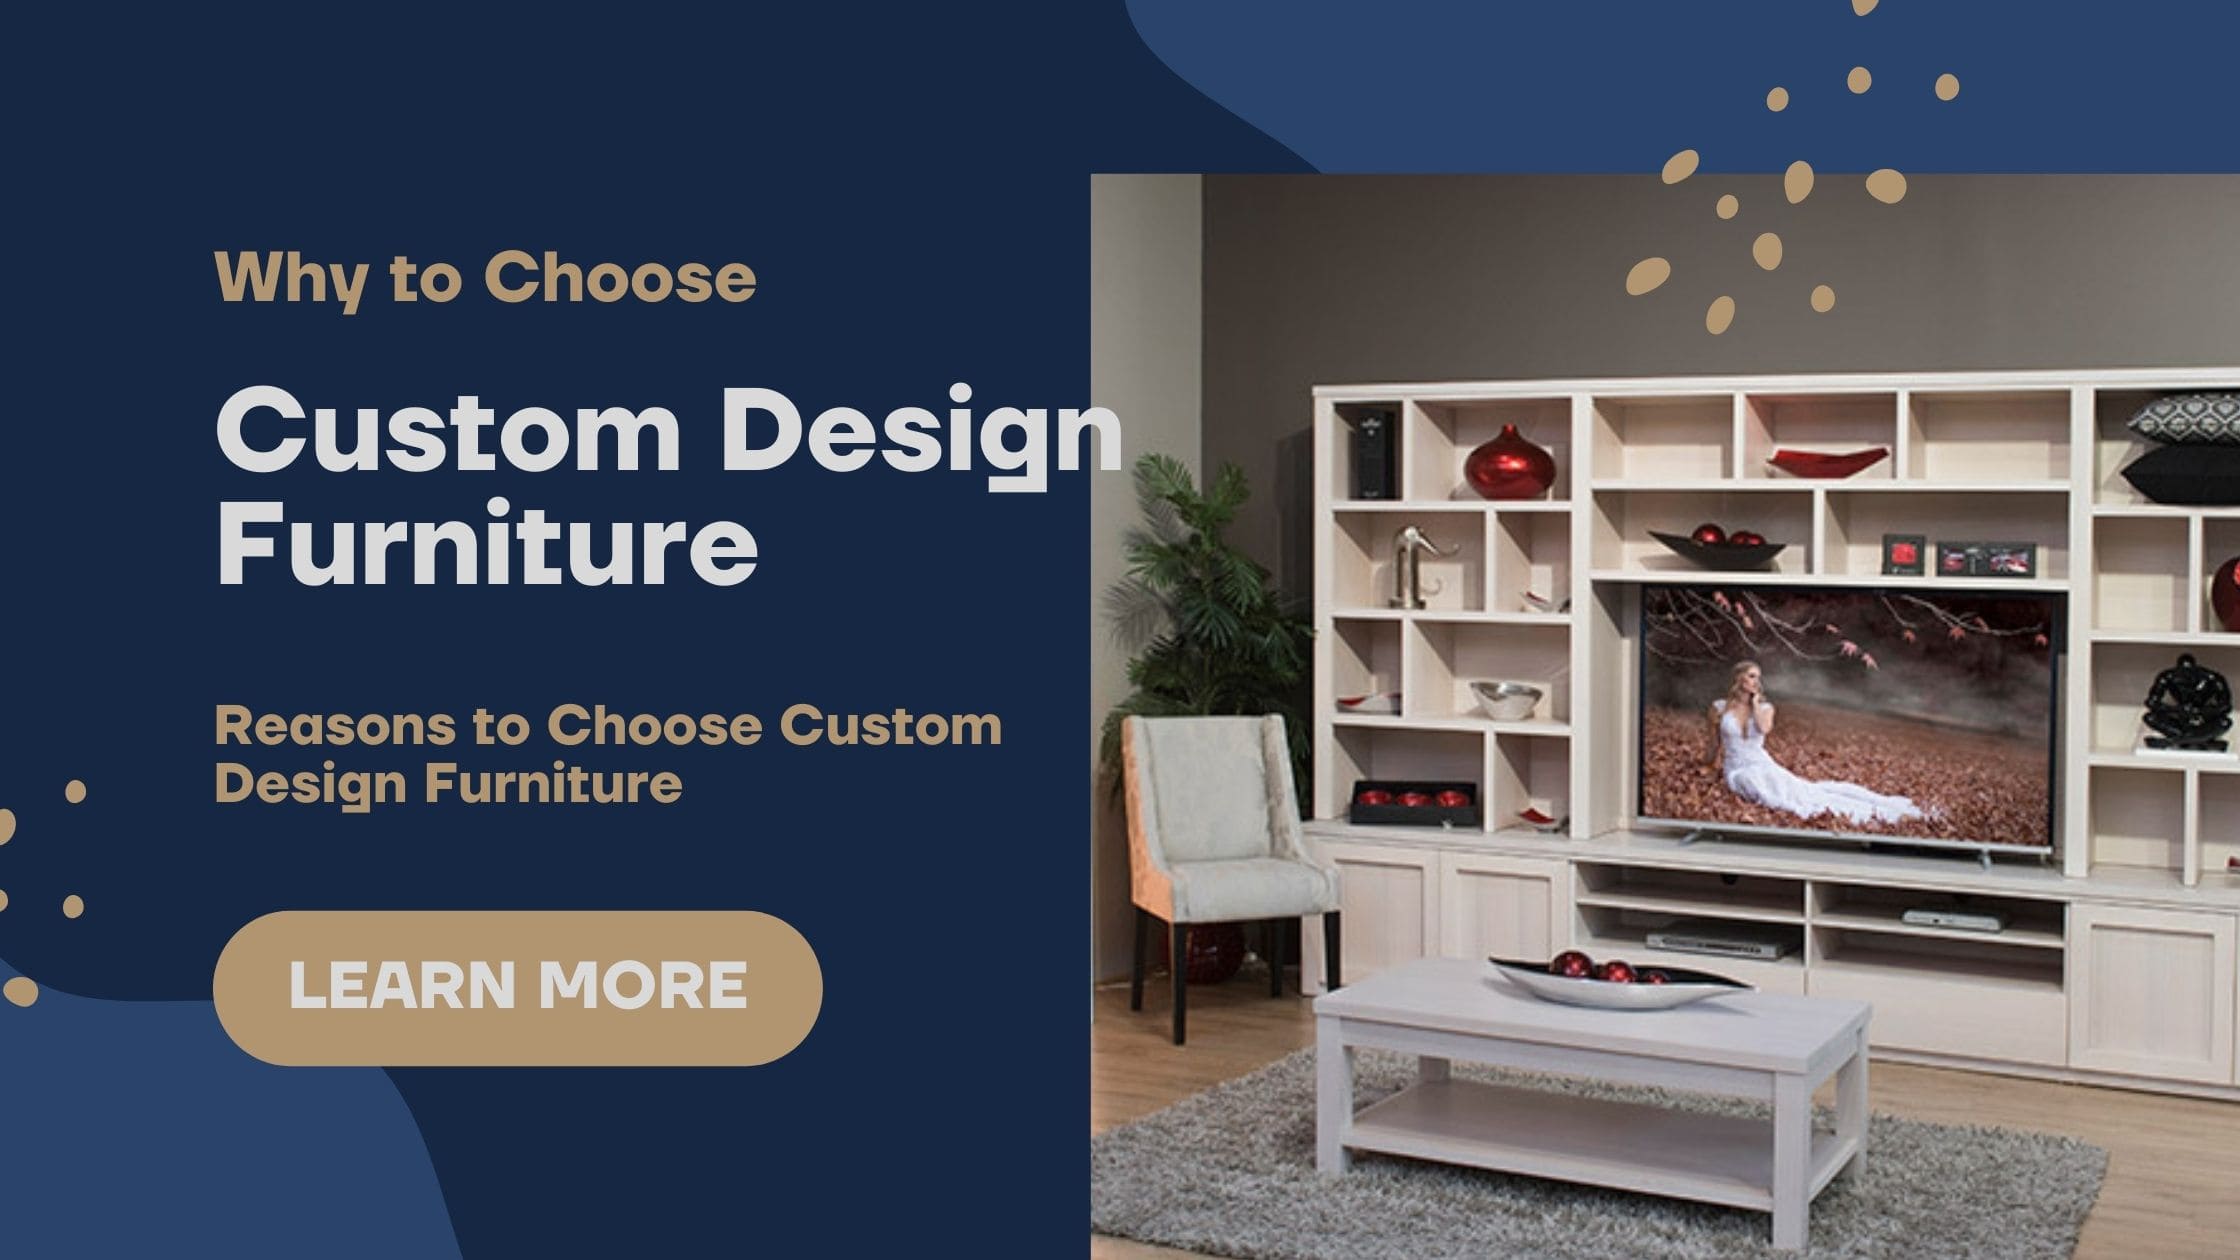 Reasons to Choose Custom Design Furniture